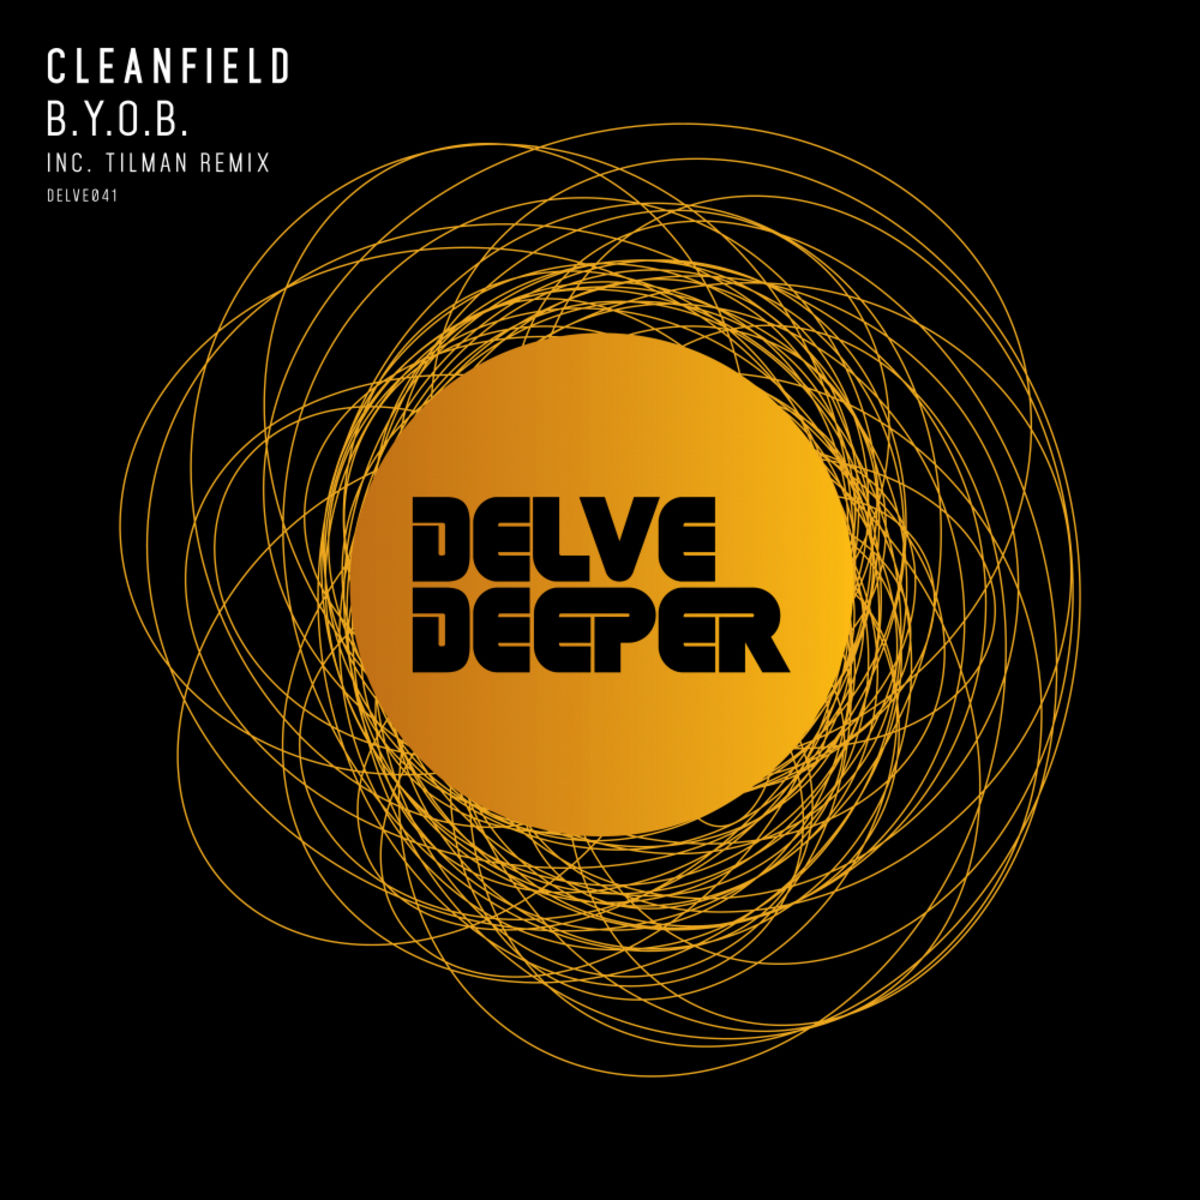 Cleanfield - B.Y.O.B. / Delve Deeper Recordings